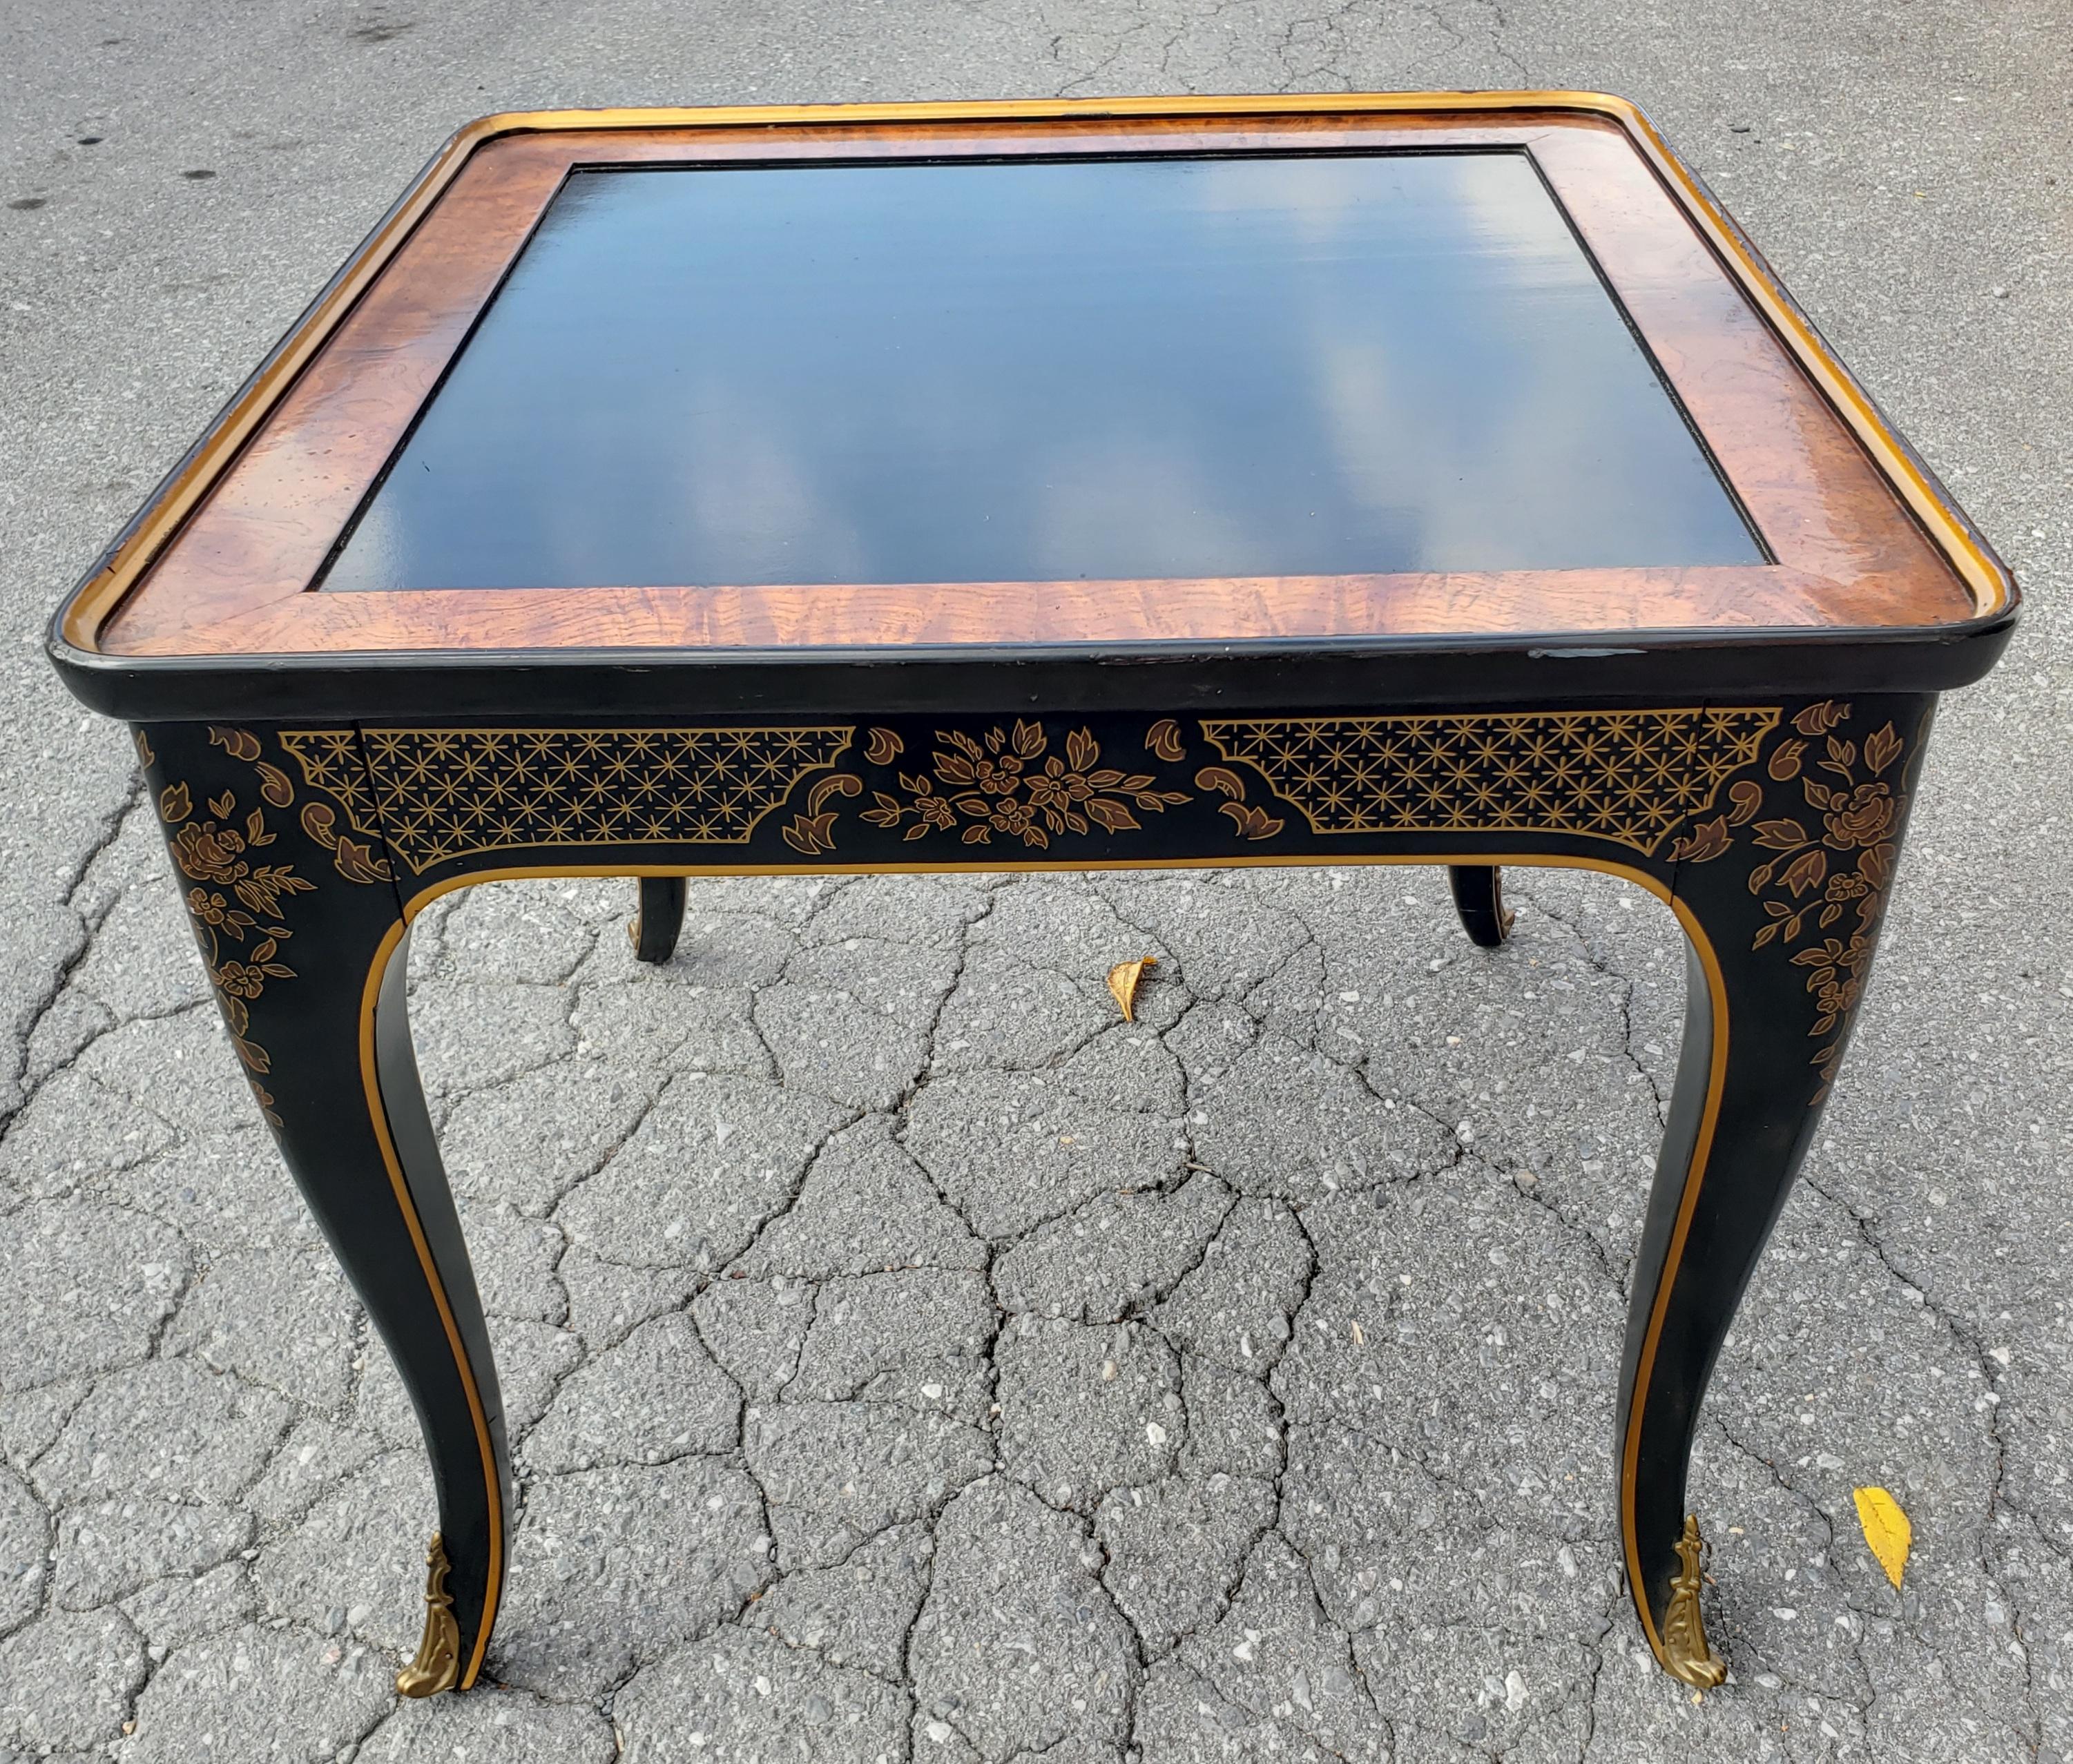 American Drexel Heritage Et Cetera Chinoiserie Black & Burl & Ormolu End Tables, a Pair For Sale